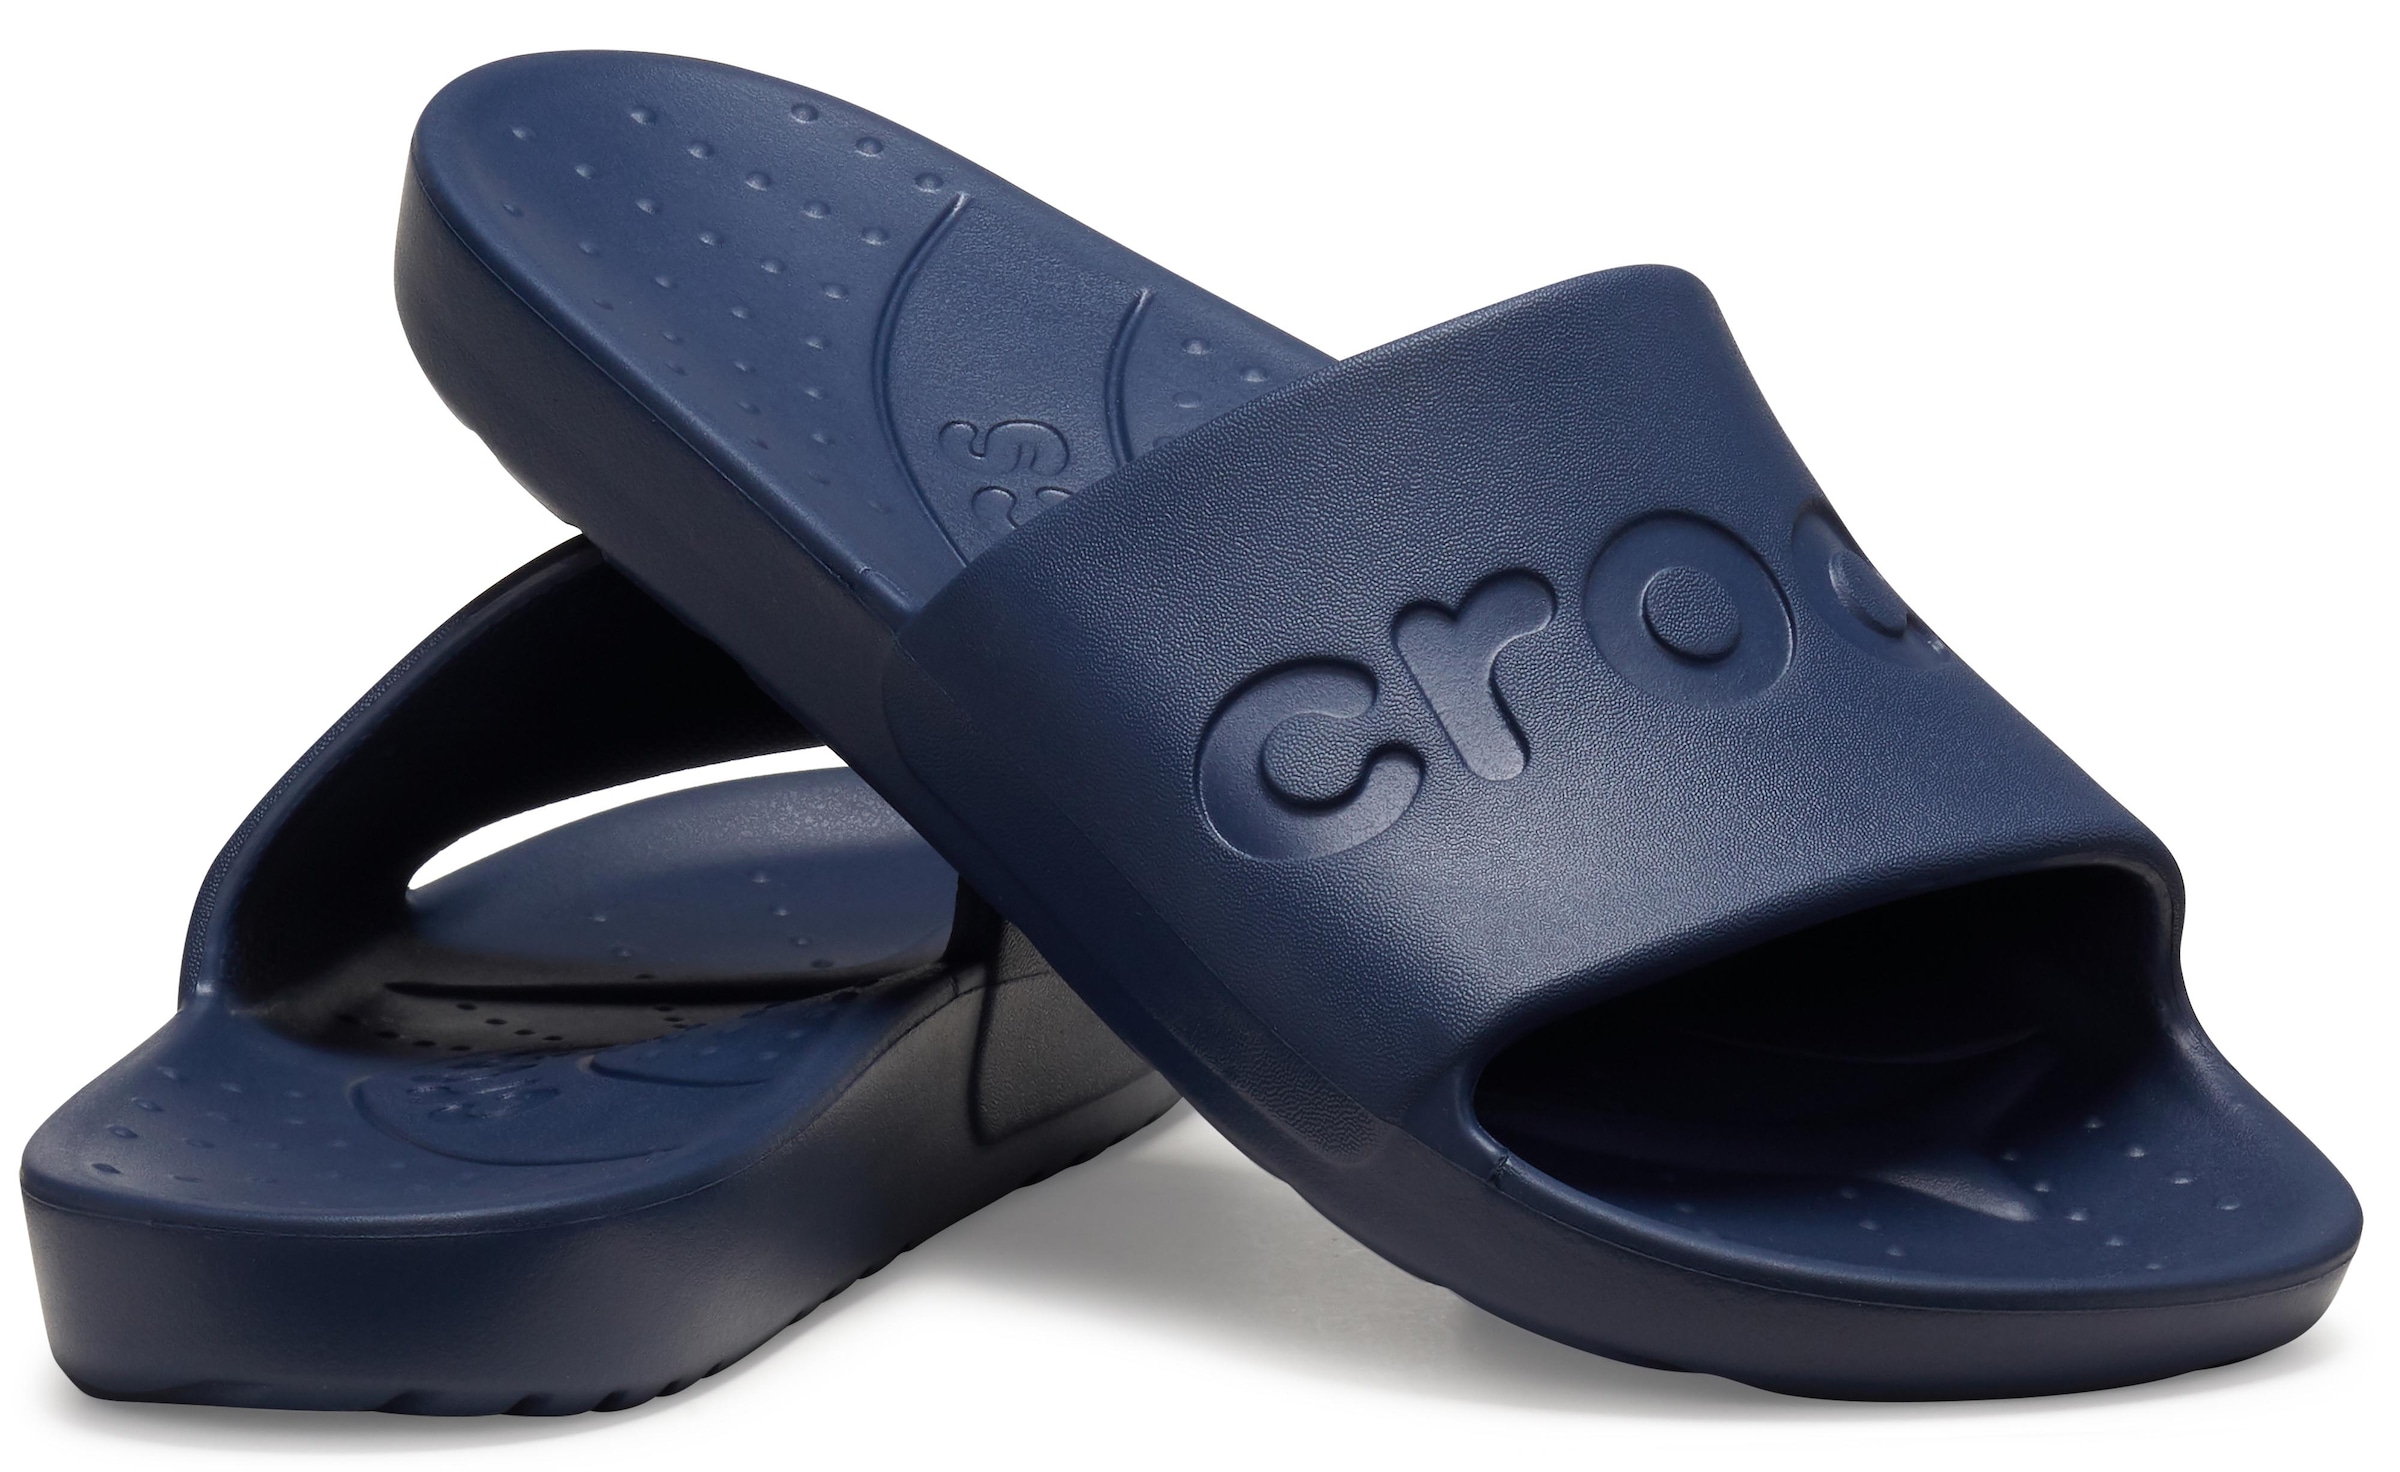 Crocs Pantolette "Crocs Slide", Badeschuh, Schlappen, Strandschuh mit bequemem Fußbett